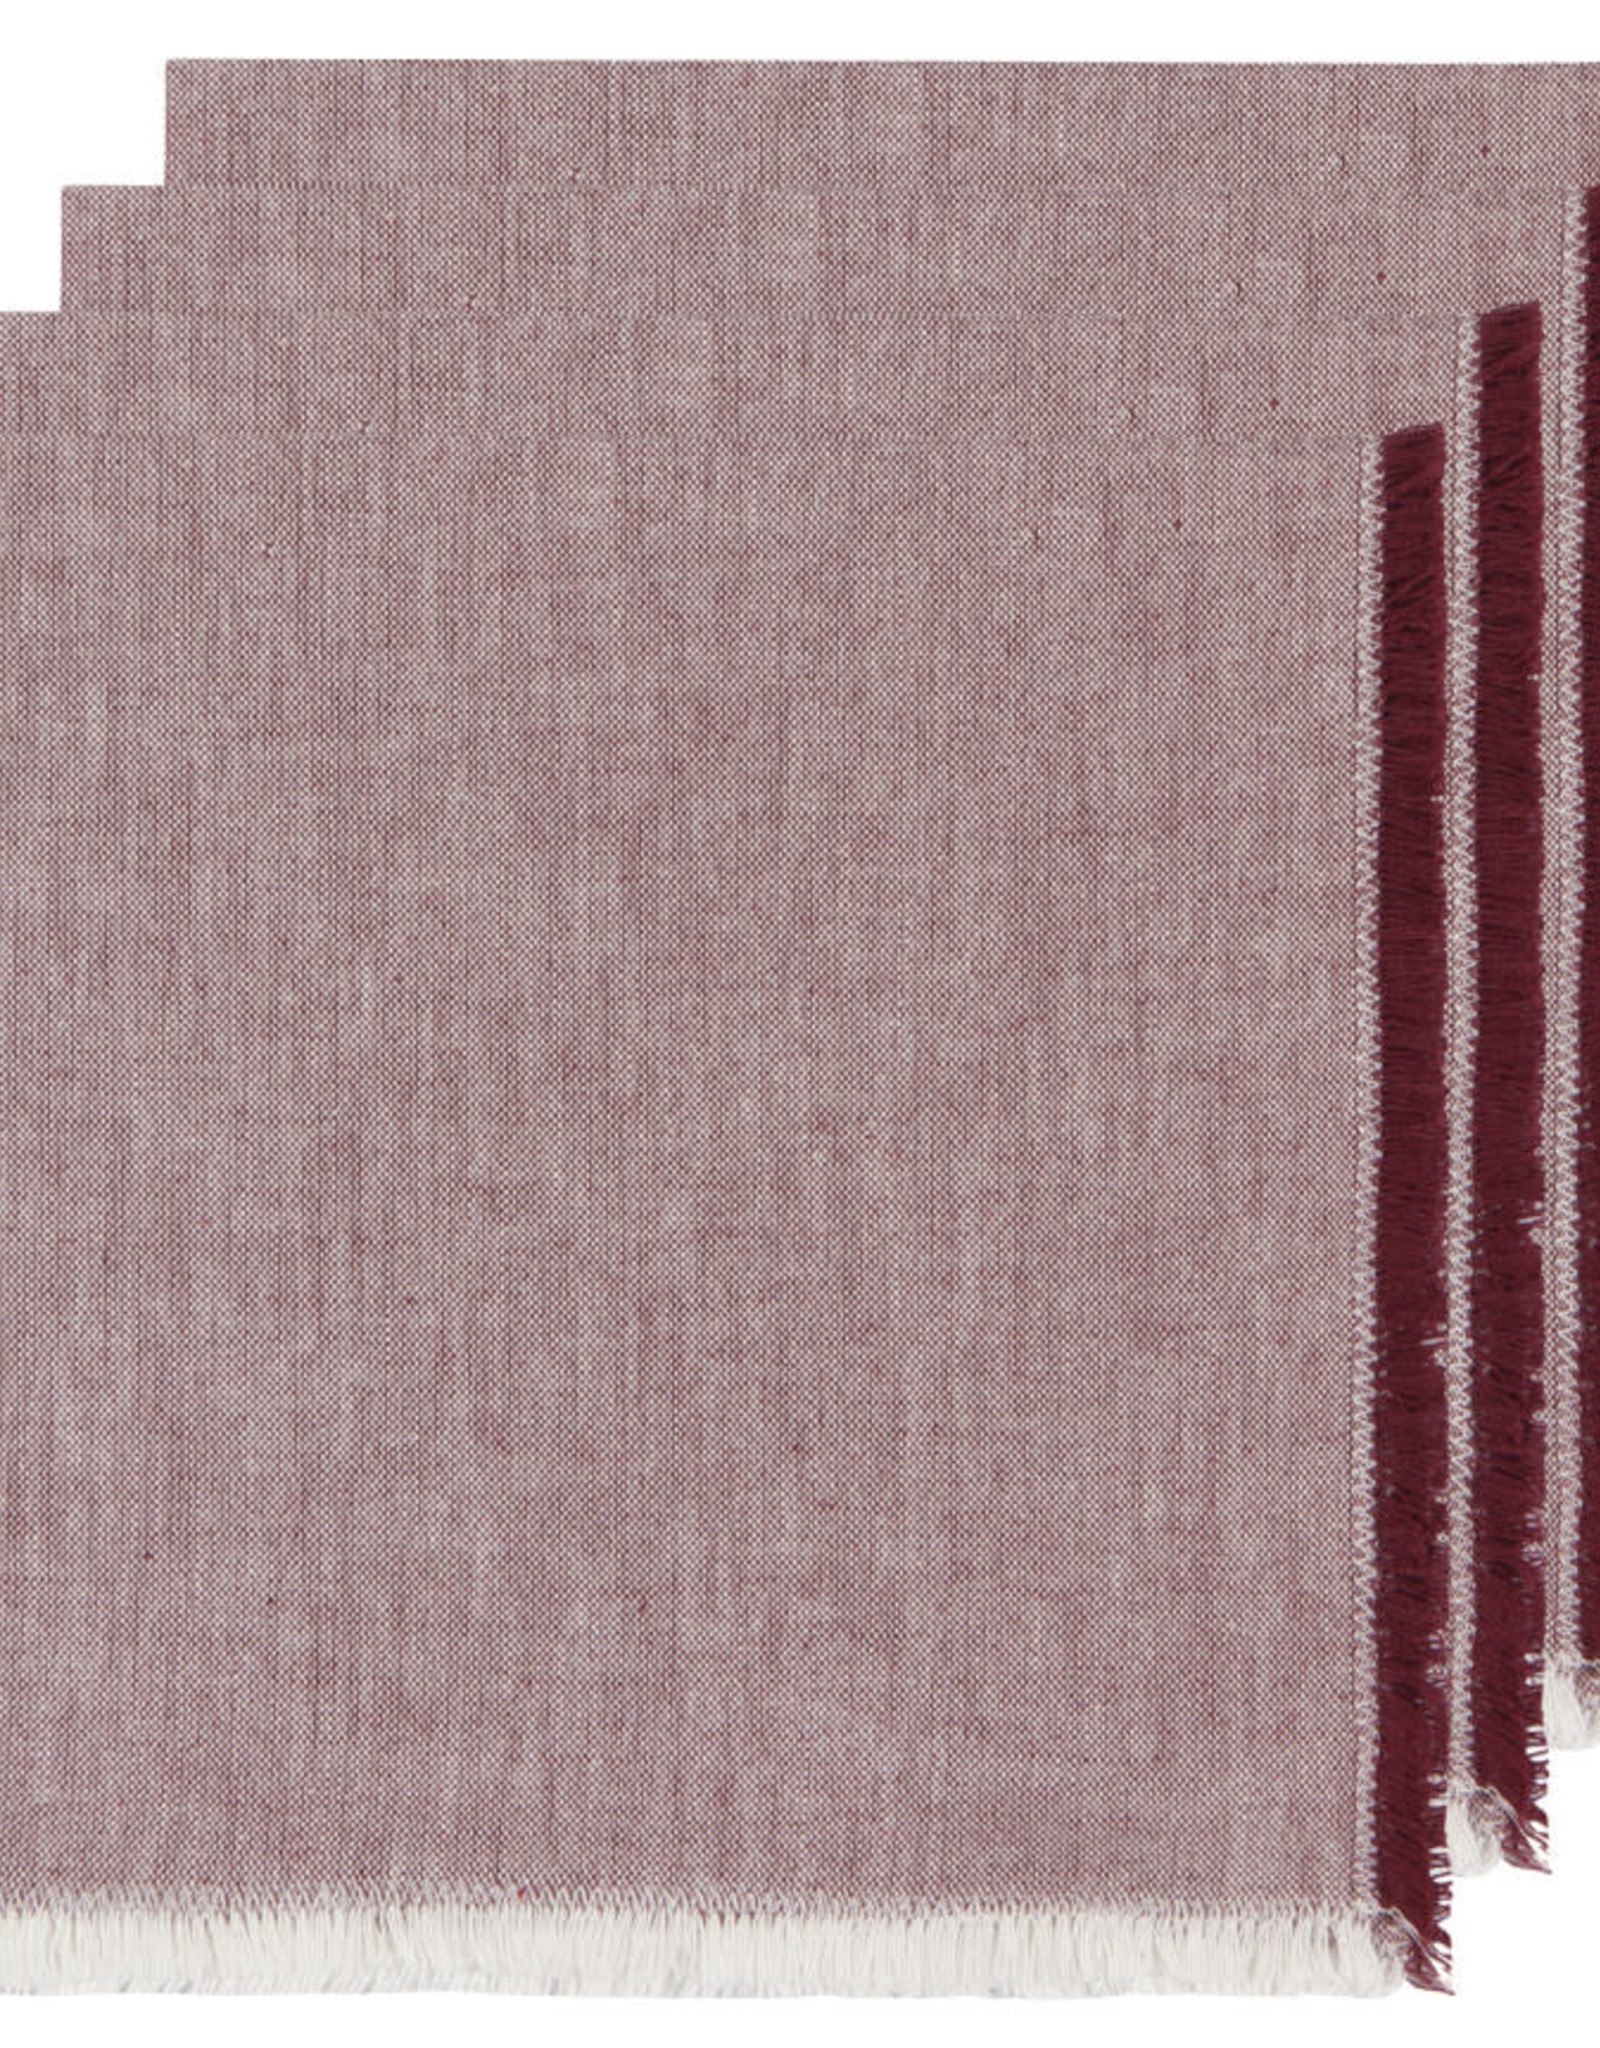 Napkin Cloth 18x18 Inch Heirloom Wine Purple Red